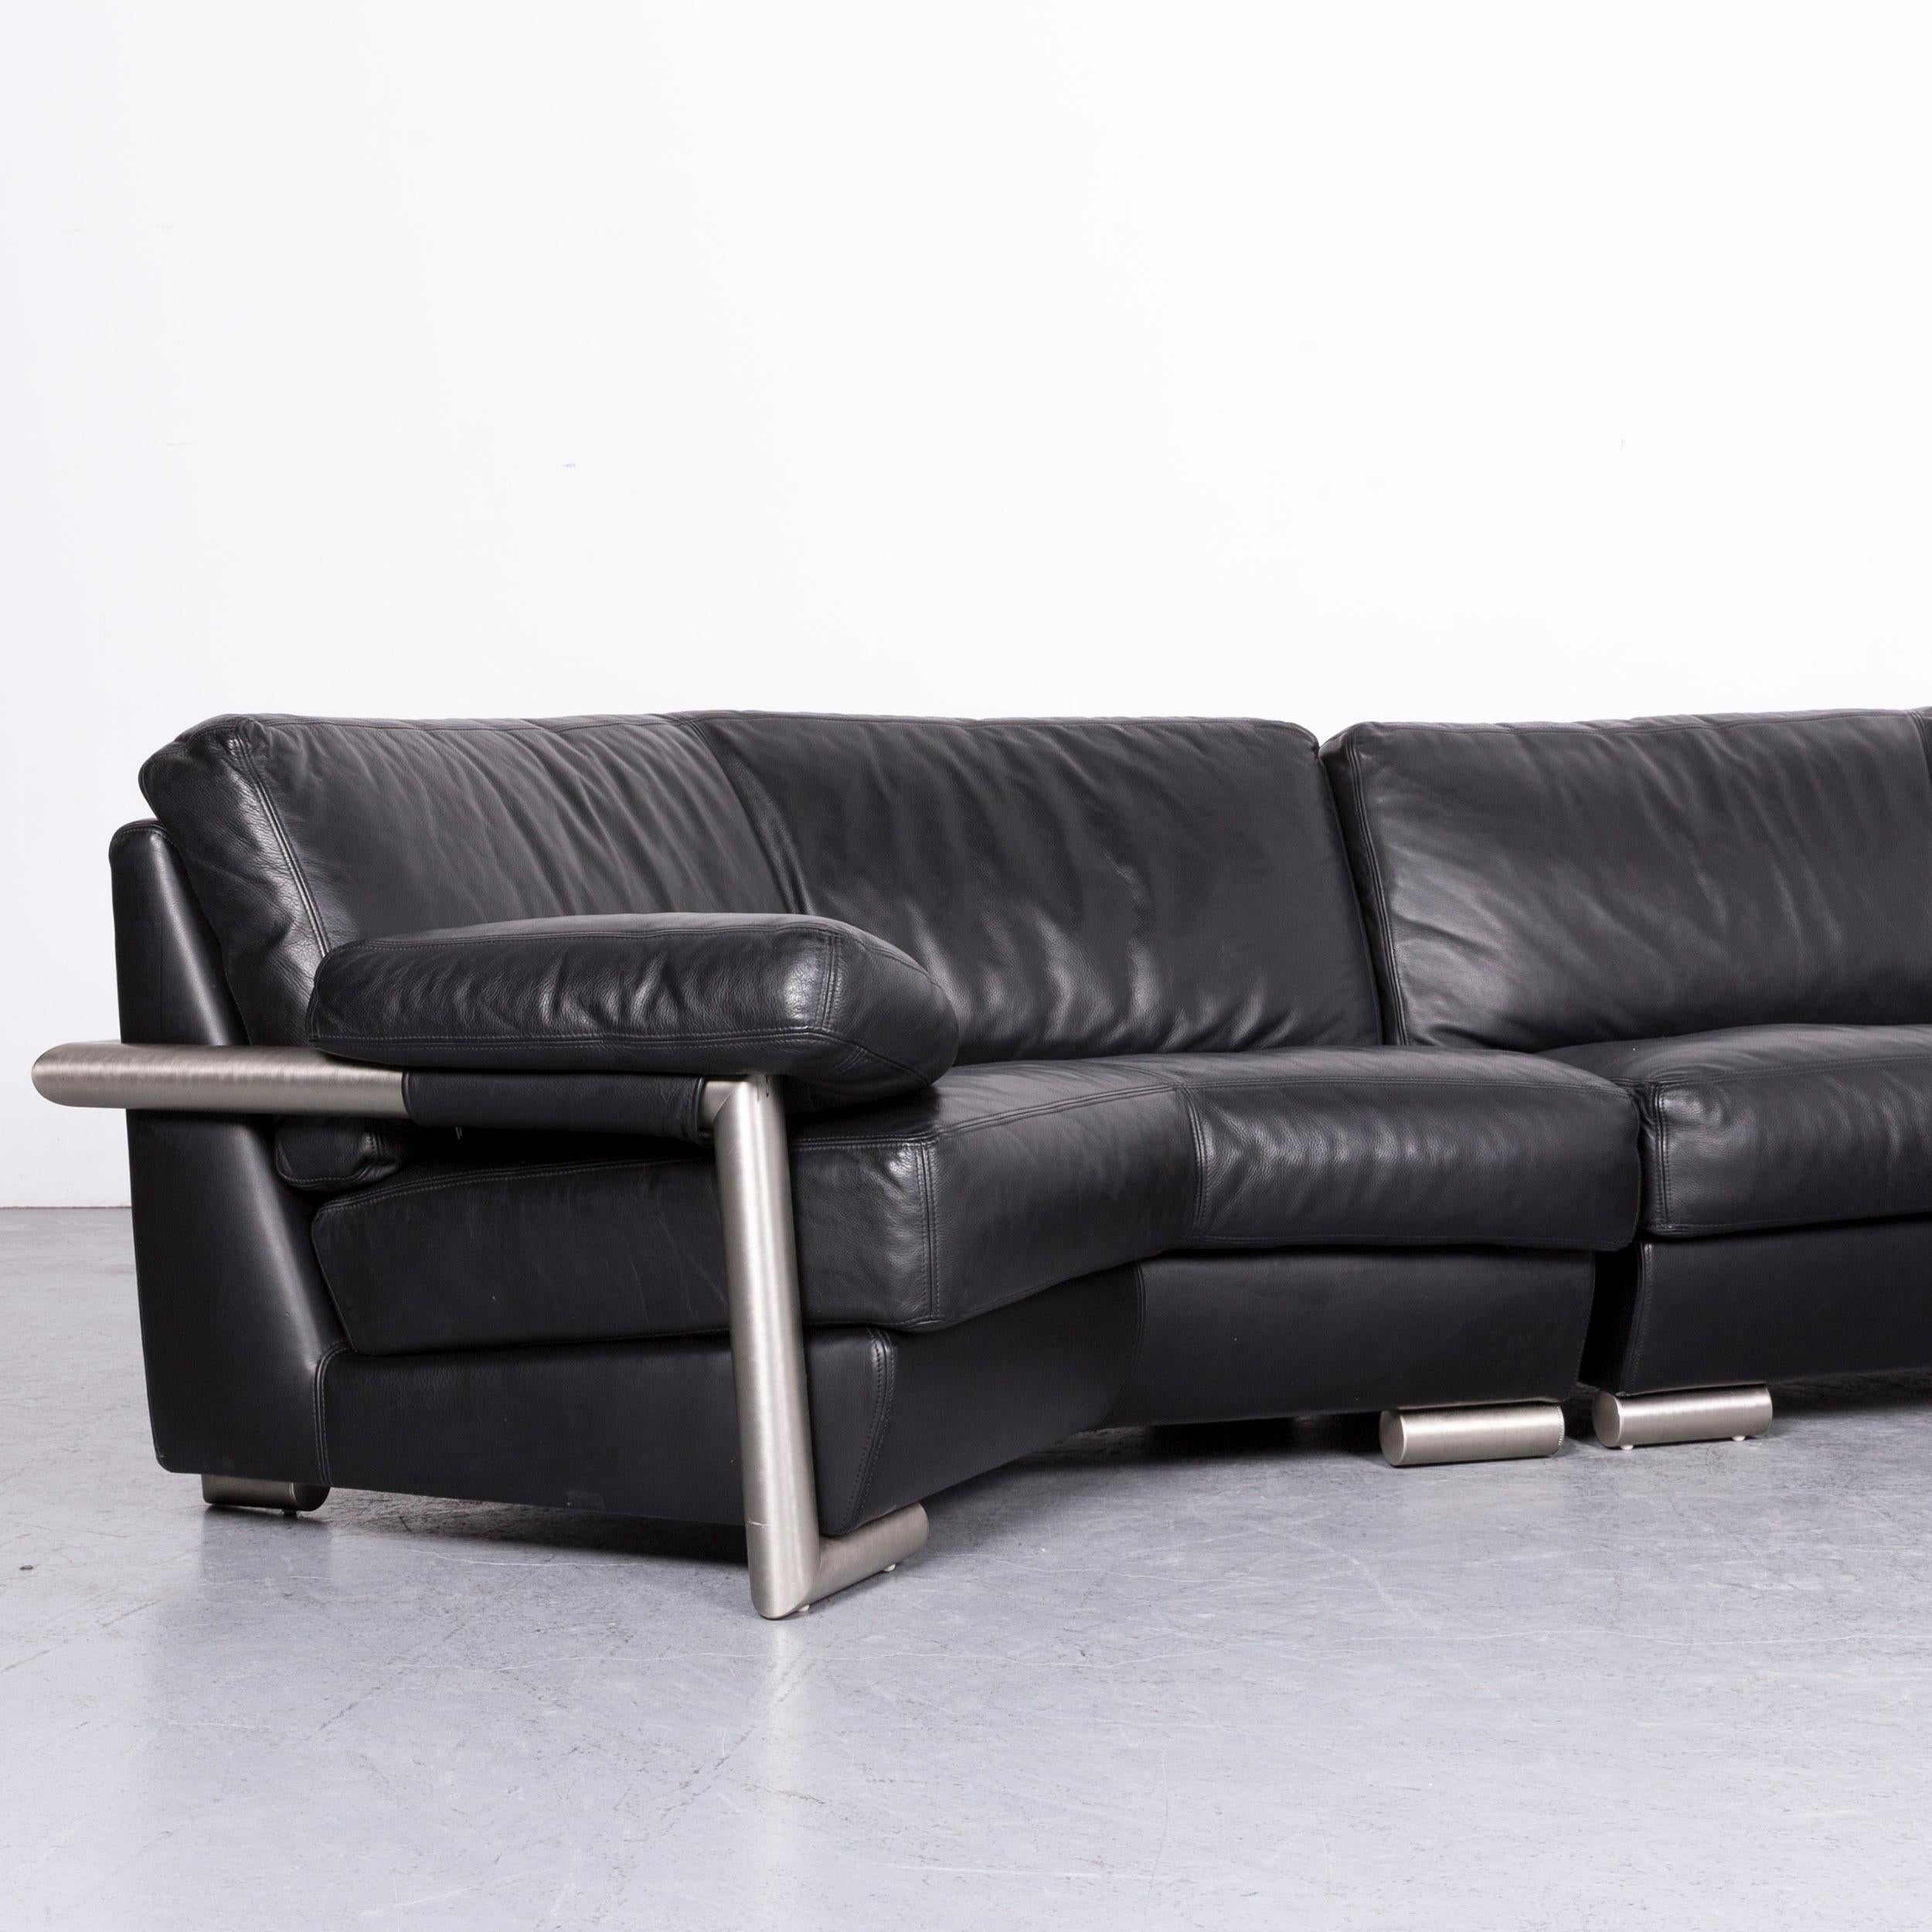 Swiss Artanova Medea Designer Black Leather Corner Sofa Couch For Sale